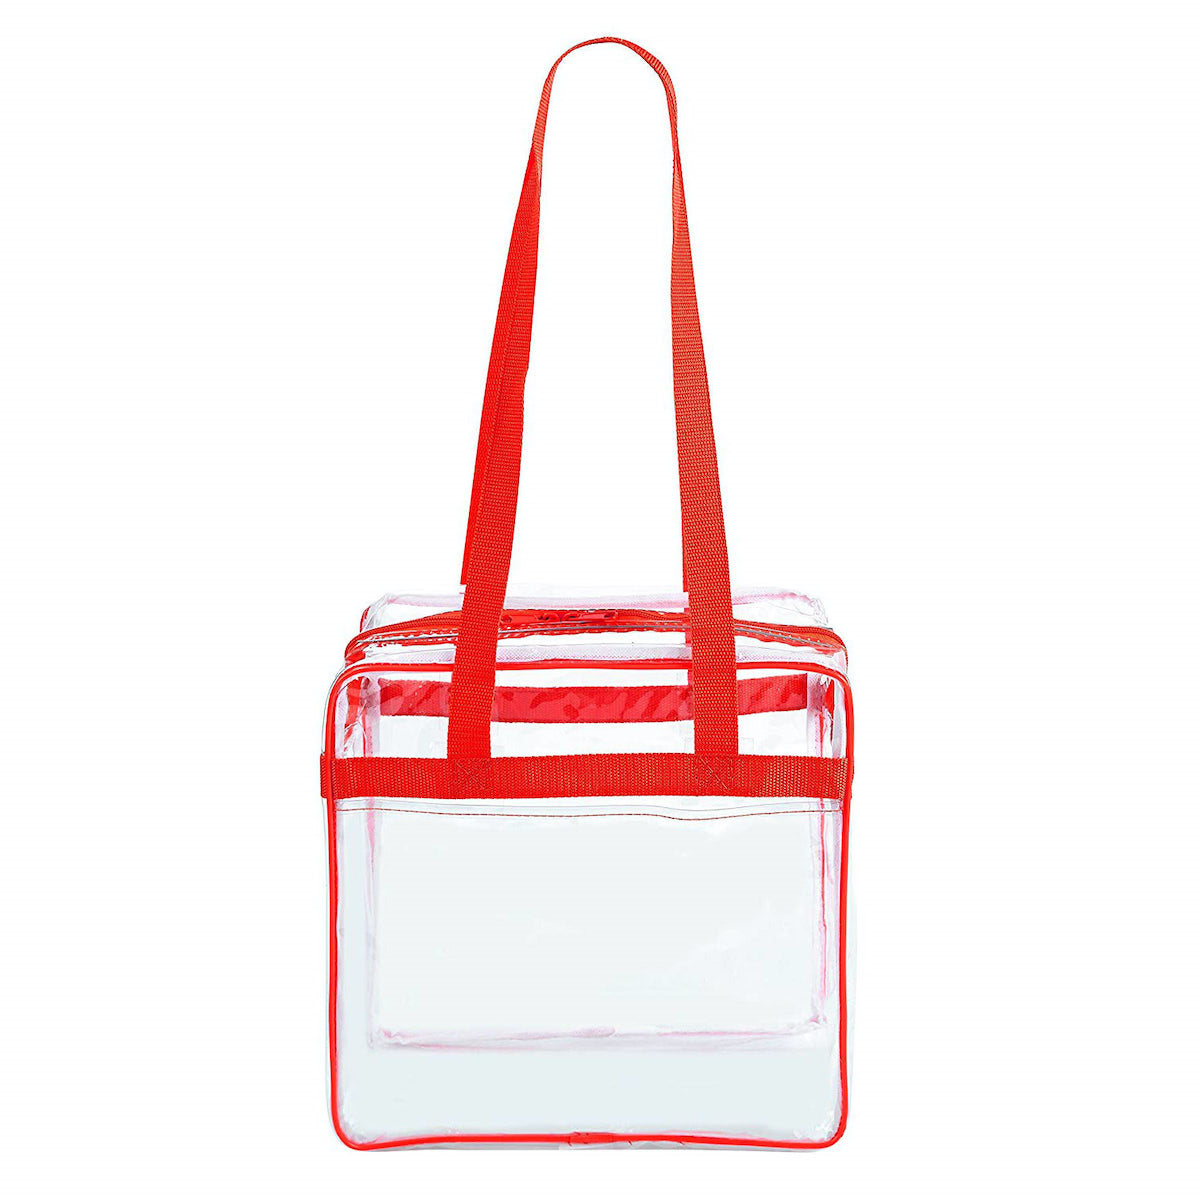 6 pcs 12 x 8 Inch Plastic Rectangle Handbag Base Shaper for Hand Bag Tote  Purse Handbag Bottom Clear Trimable